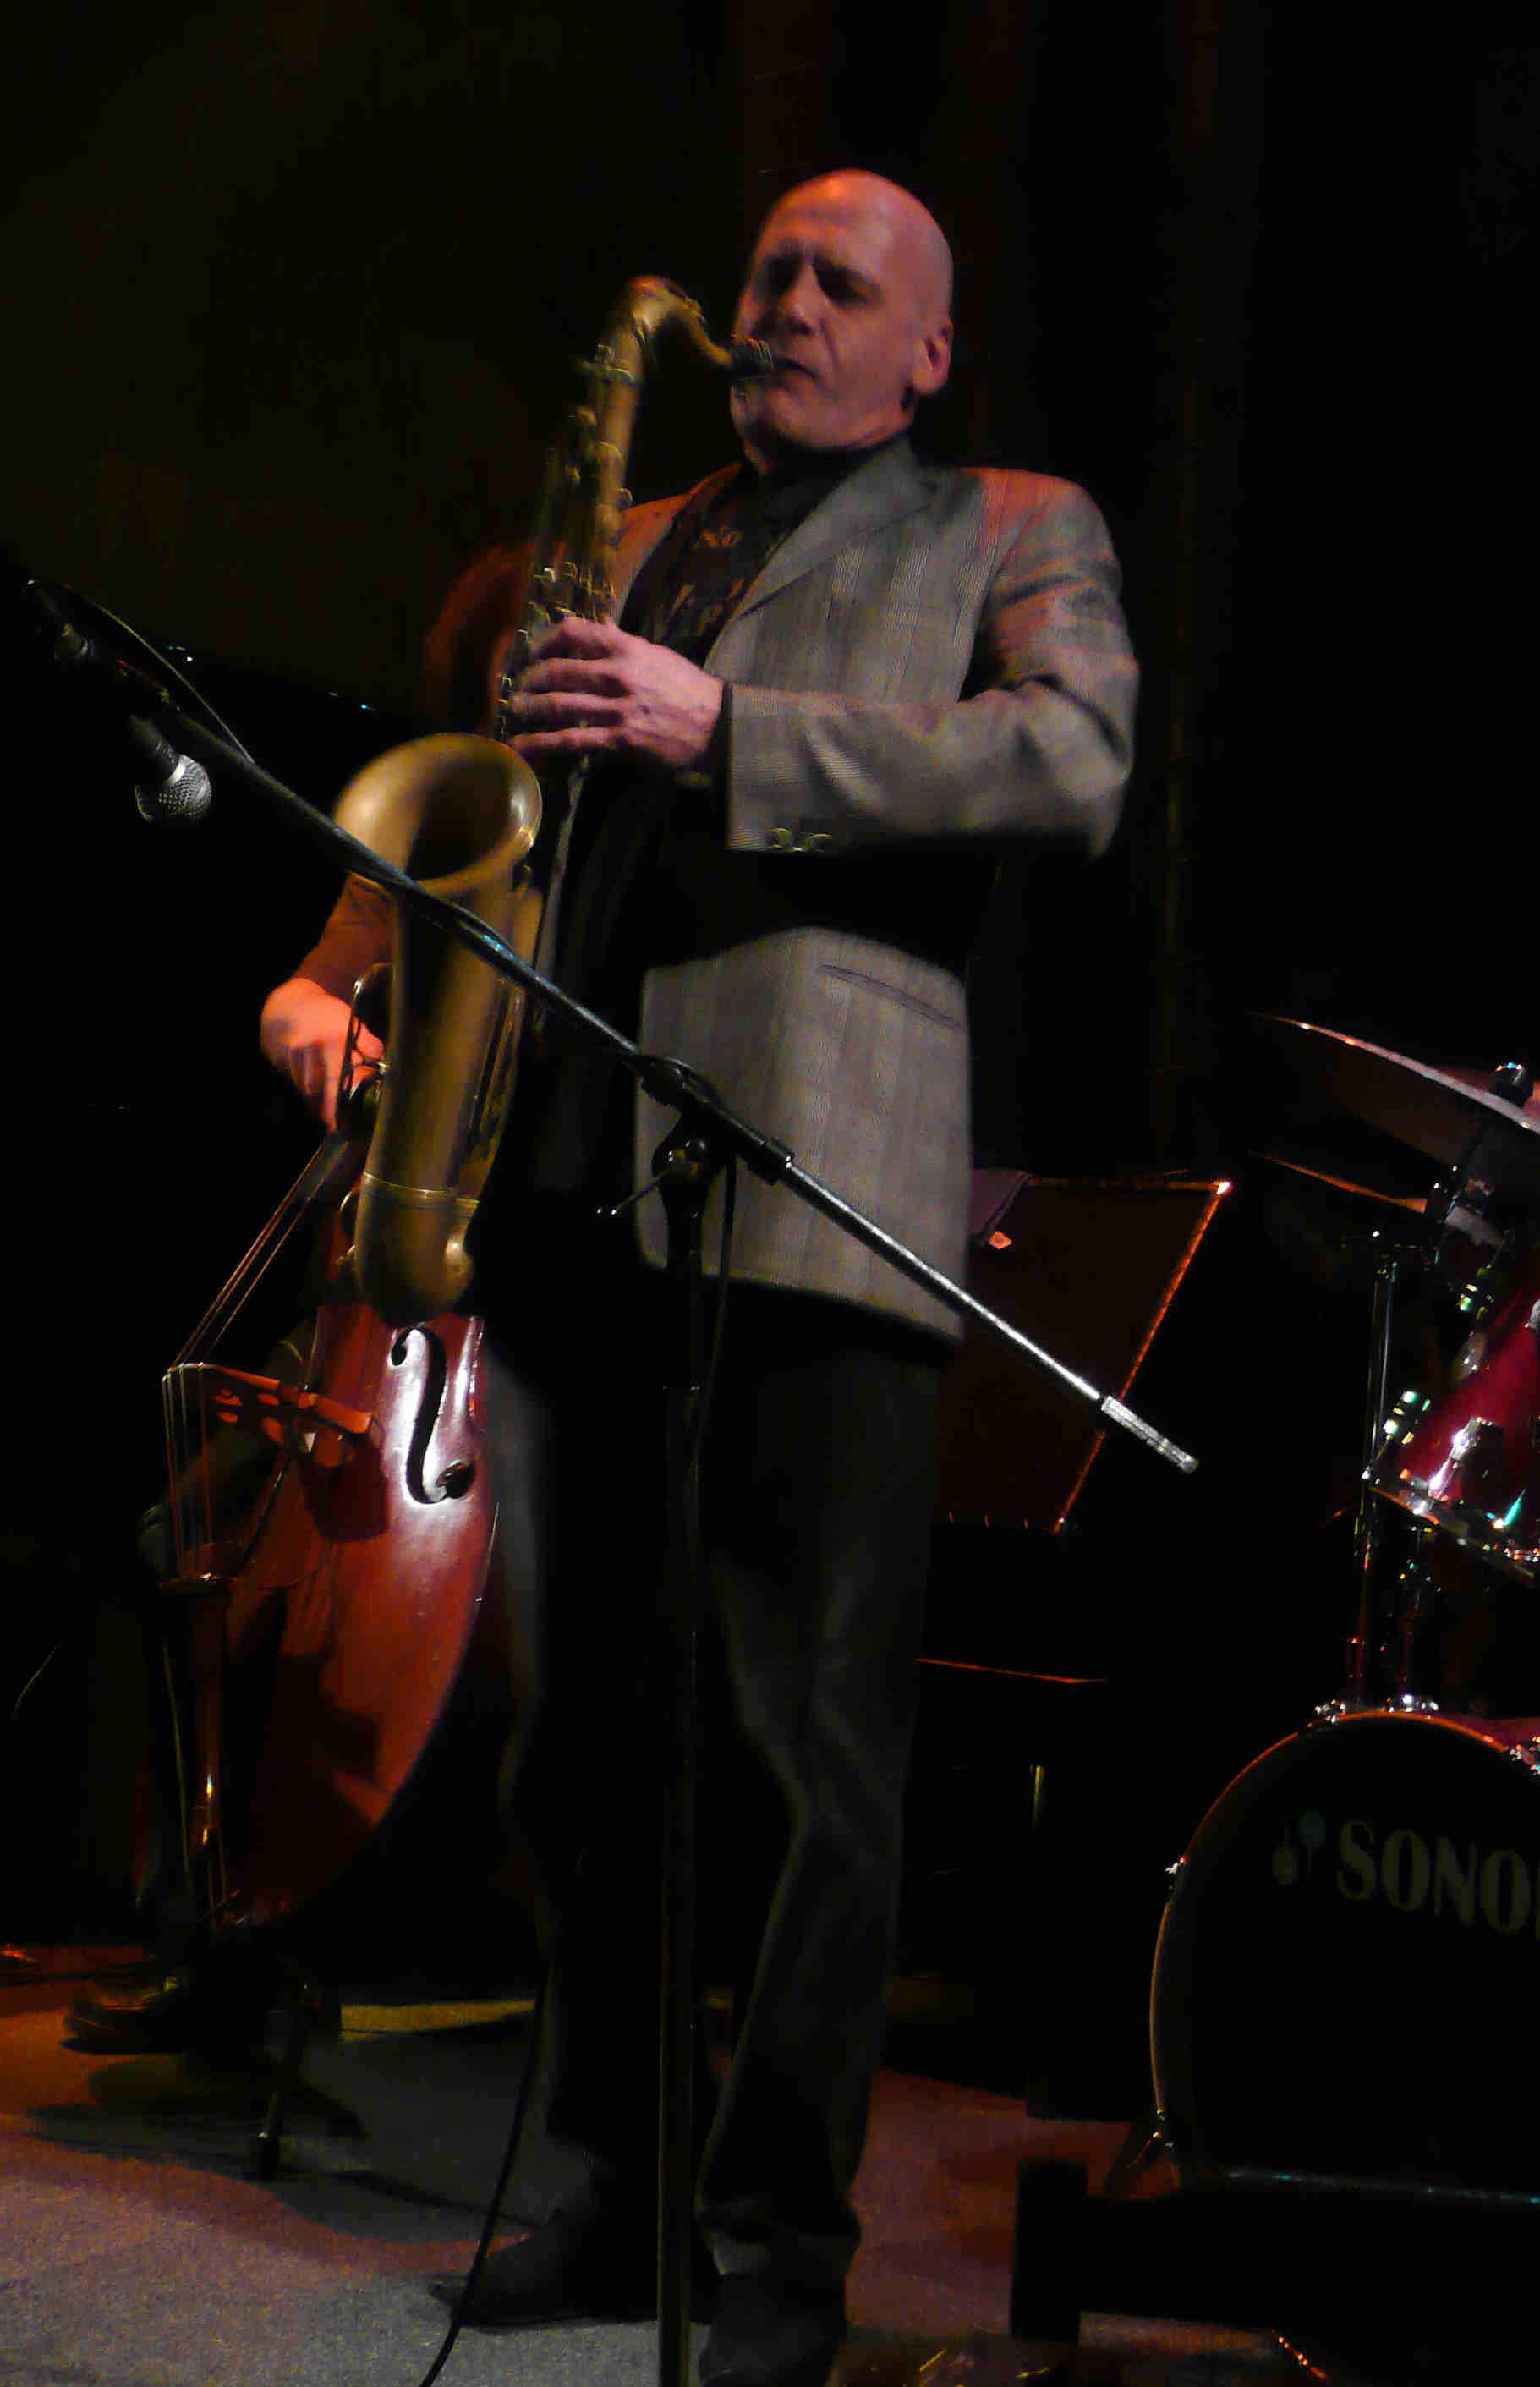 Prague jazz - saxophone player